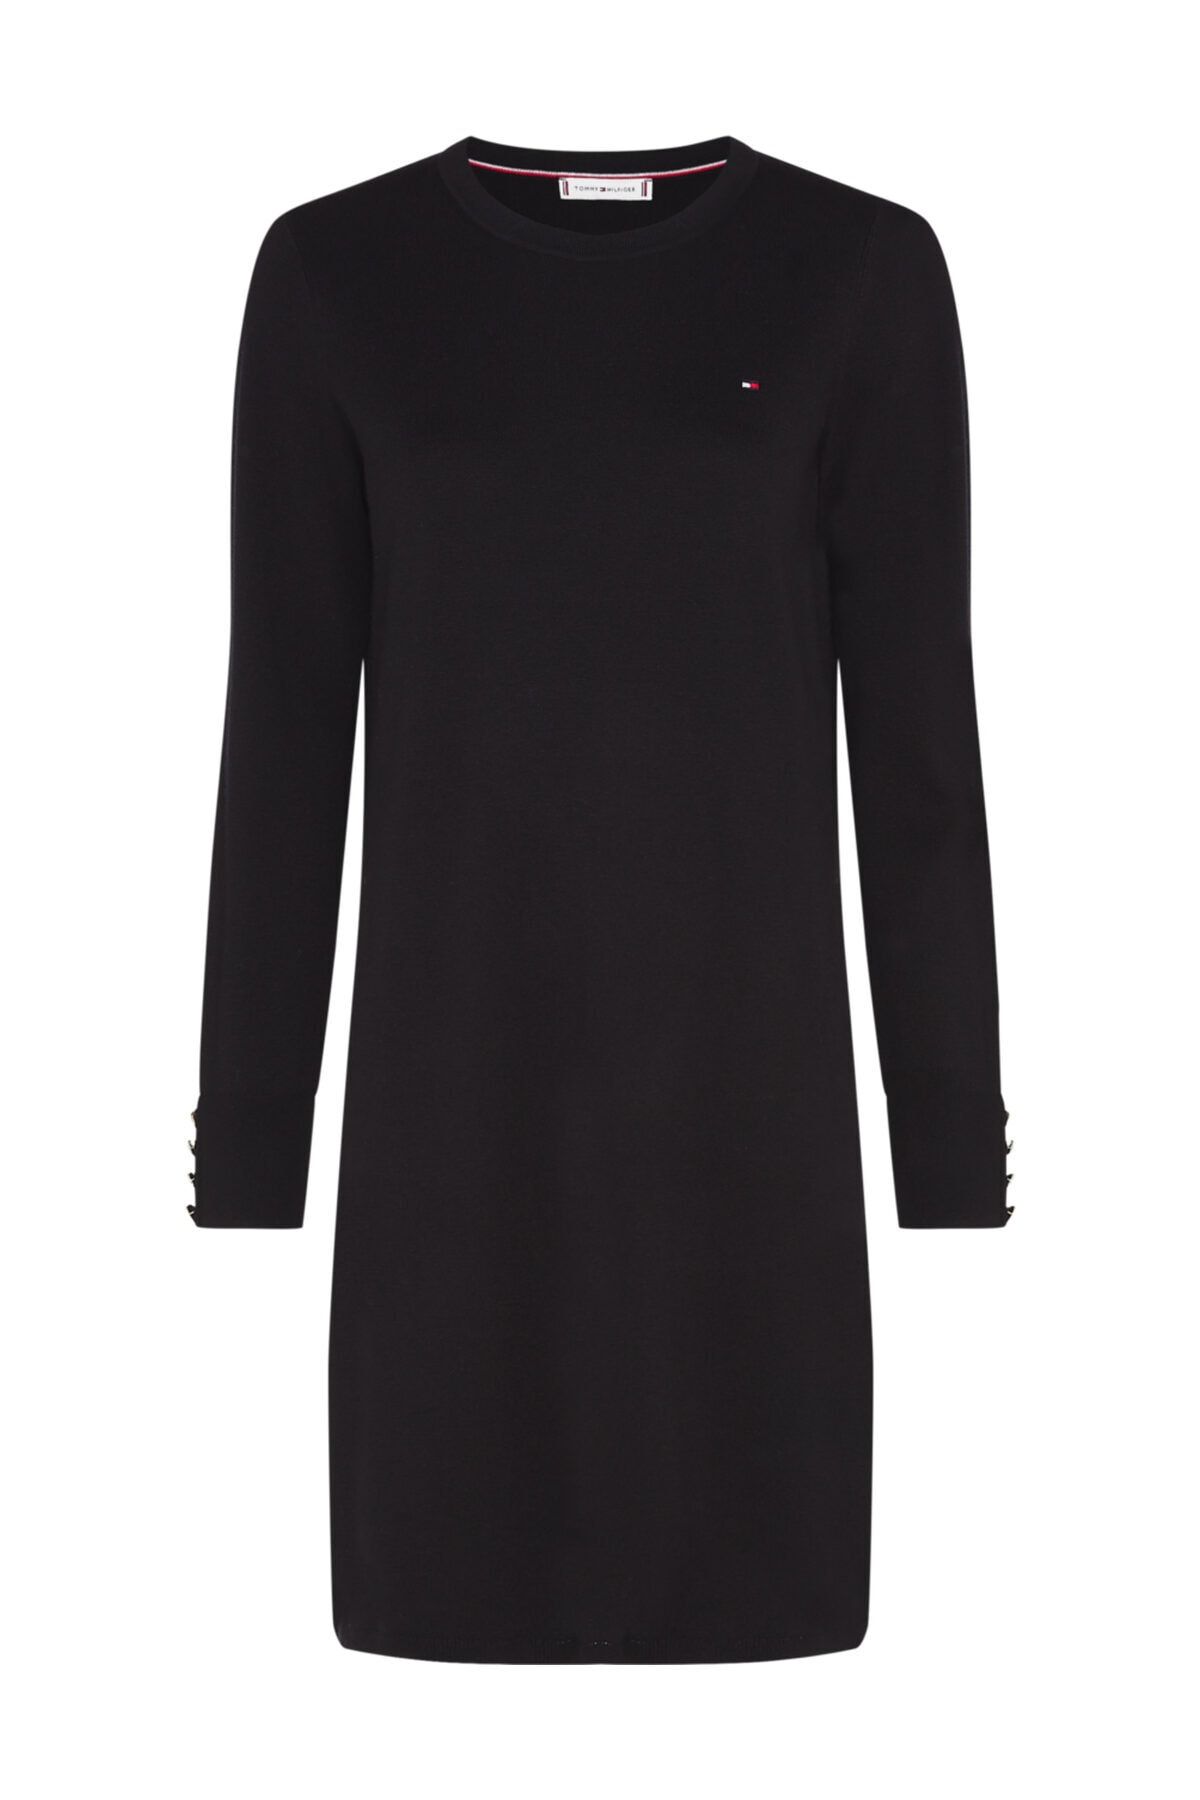 Tommy Hilfiger Kadın Siyah Elbise Soft Cotton C-Nk Dress Ls WW0WW29320